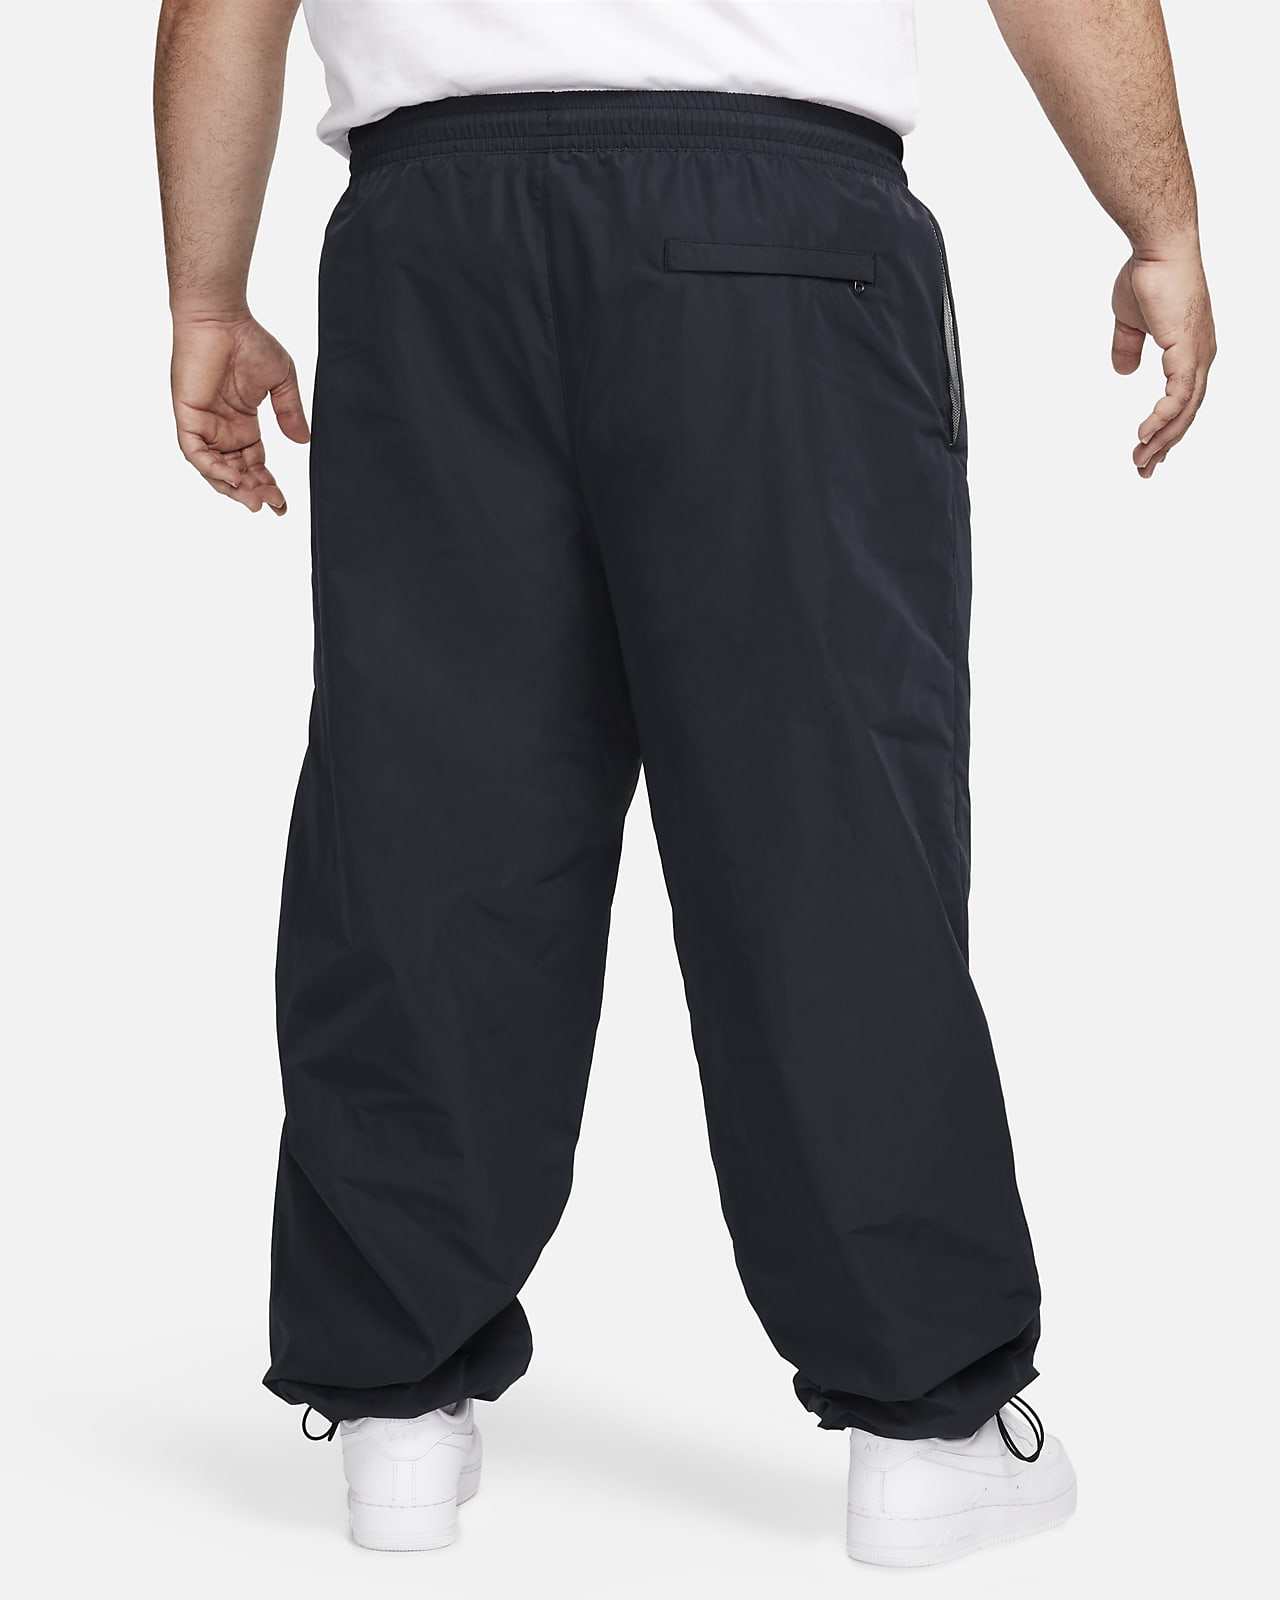 Nike Swoosh Men's Woven Pants.